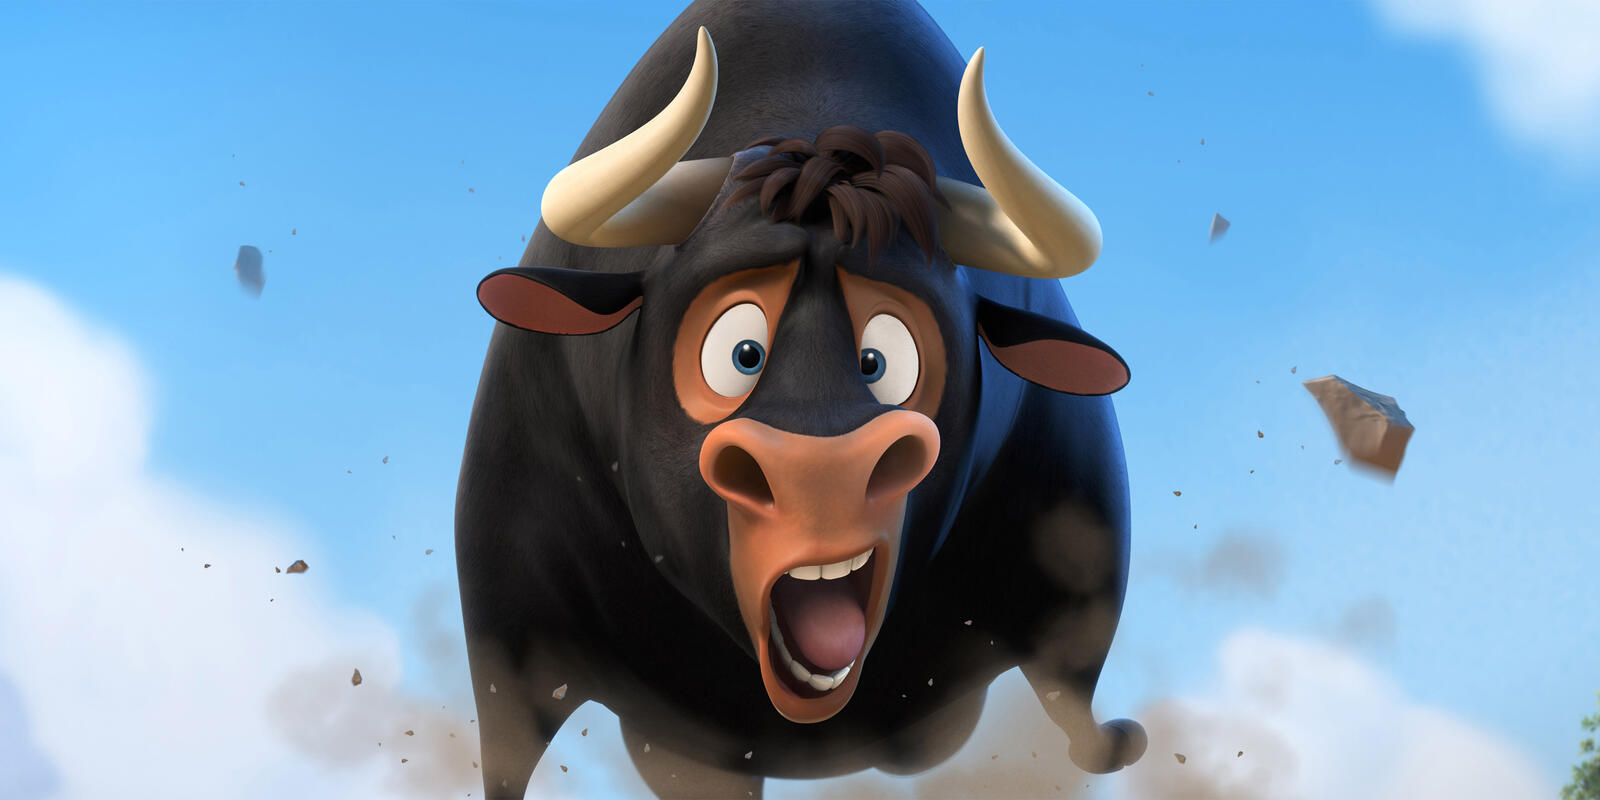 Wallpapers cartoons animated movies Ferdinand on the desktop